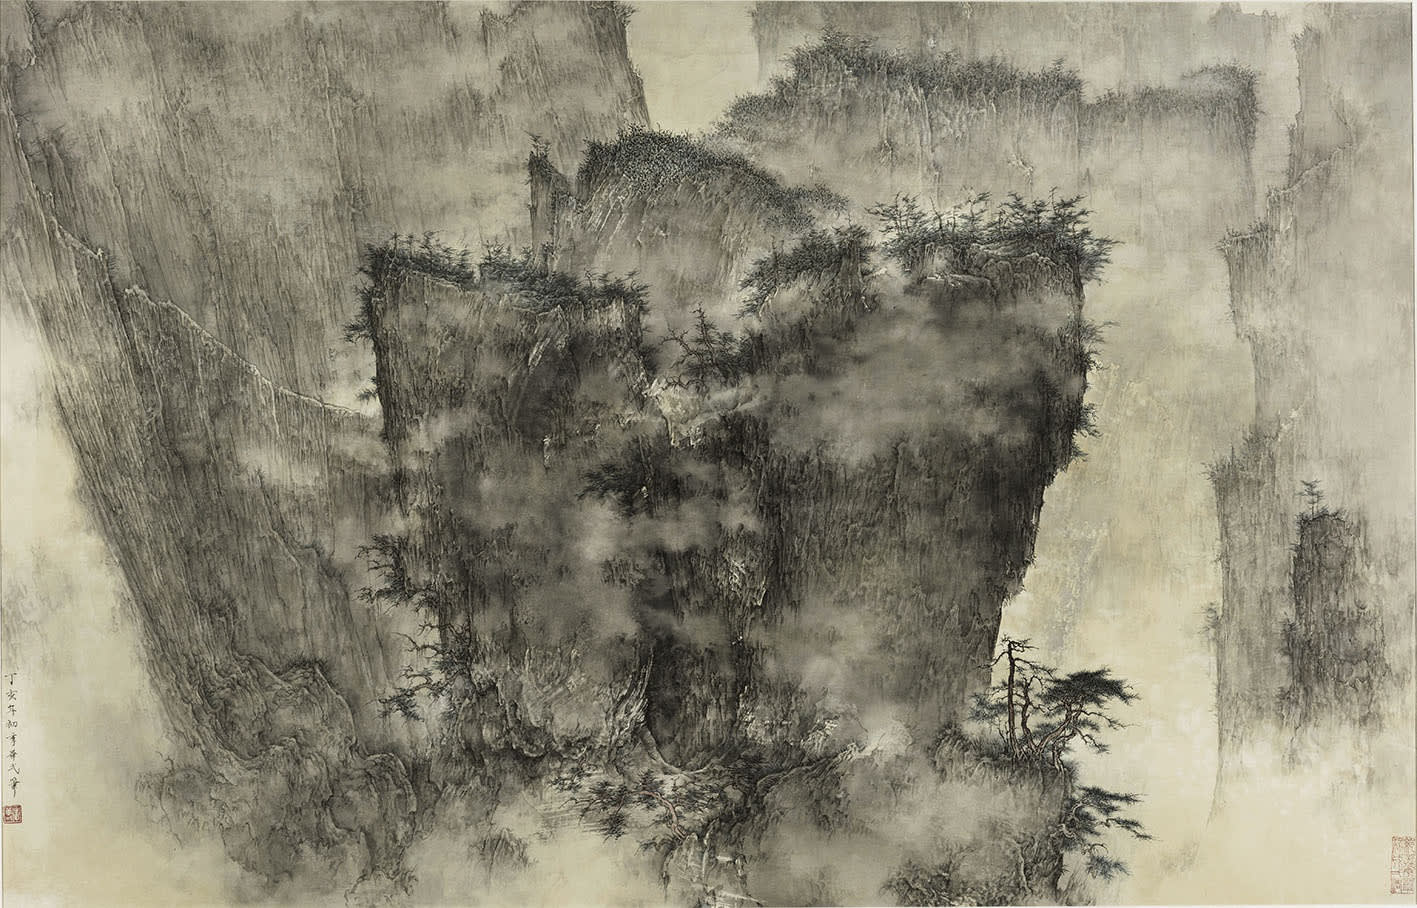 Li Huayi 李華弌, A Gathering of Pines and Clouds 《雲松聚》, 2007